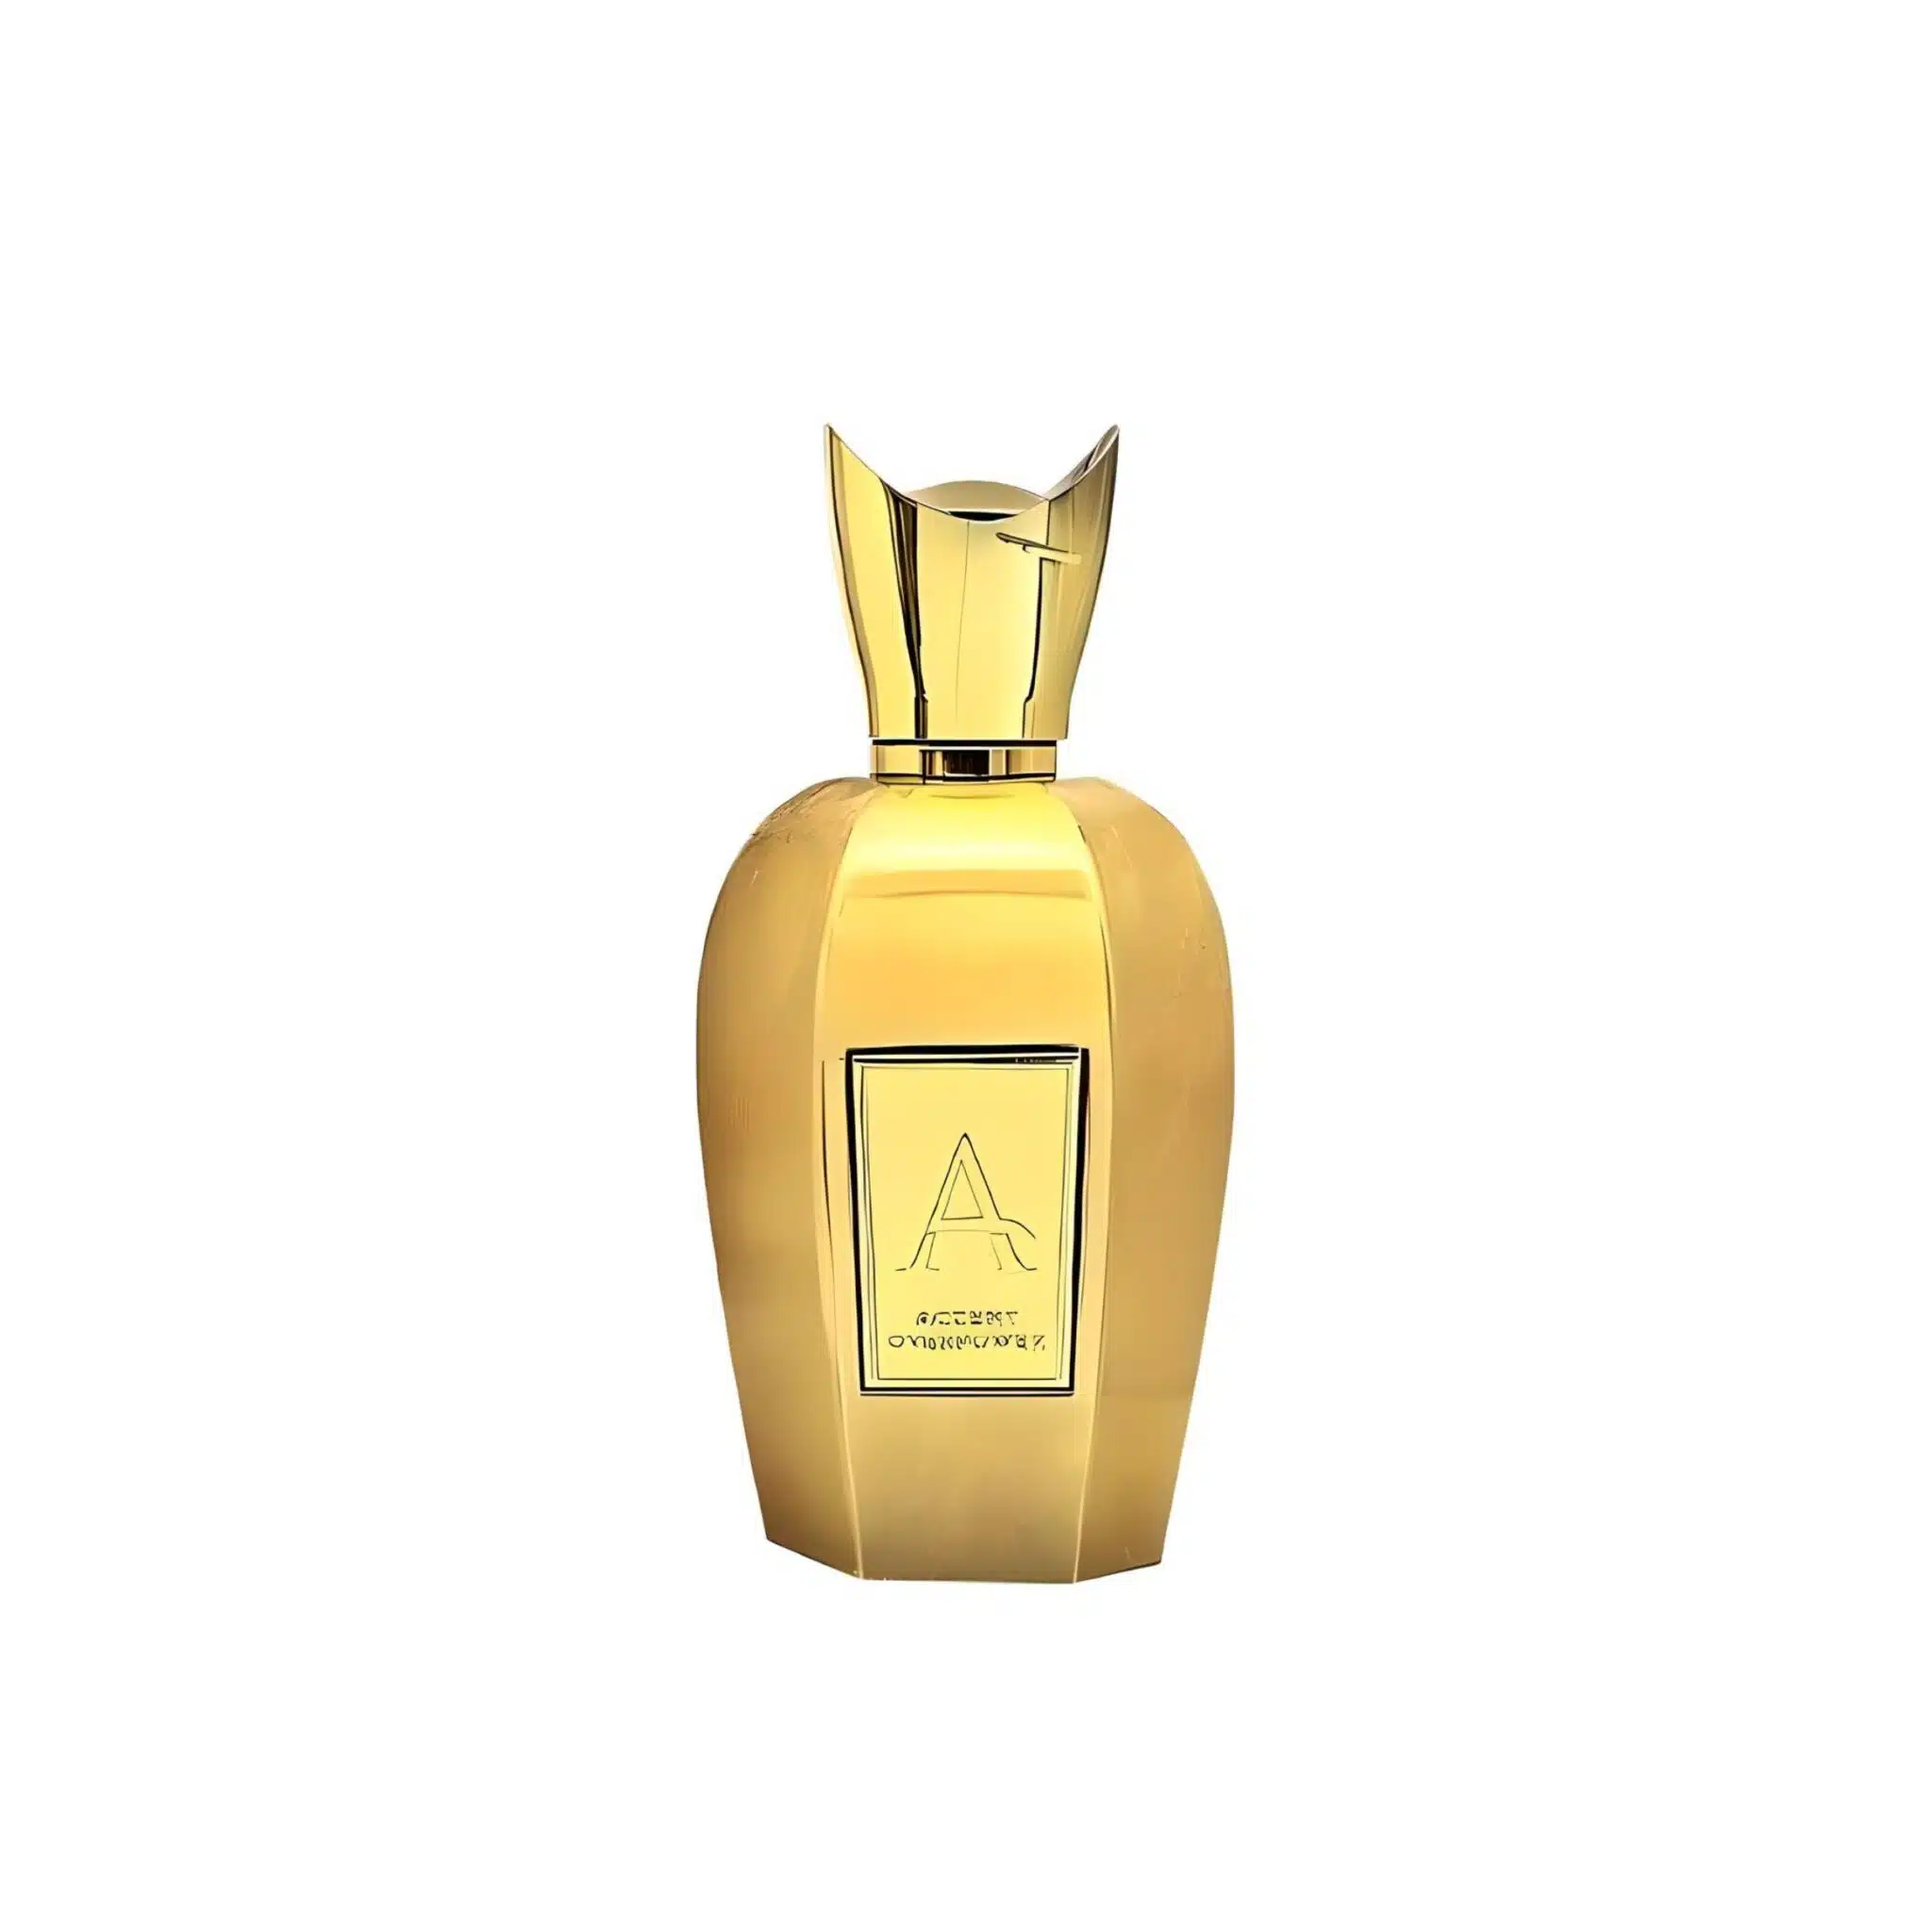 Accent Overpower Perfume Eau De Parfum 100Ml By Fragrance World